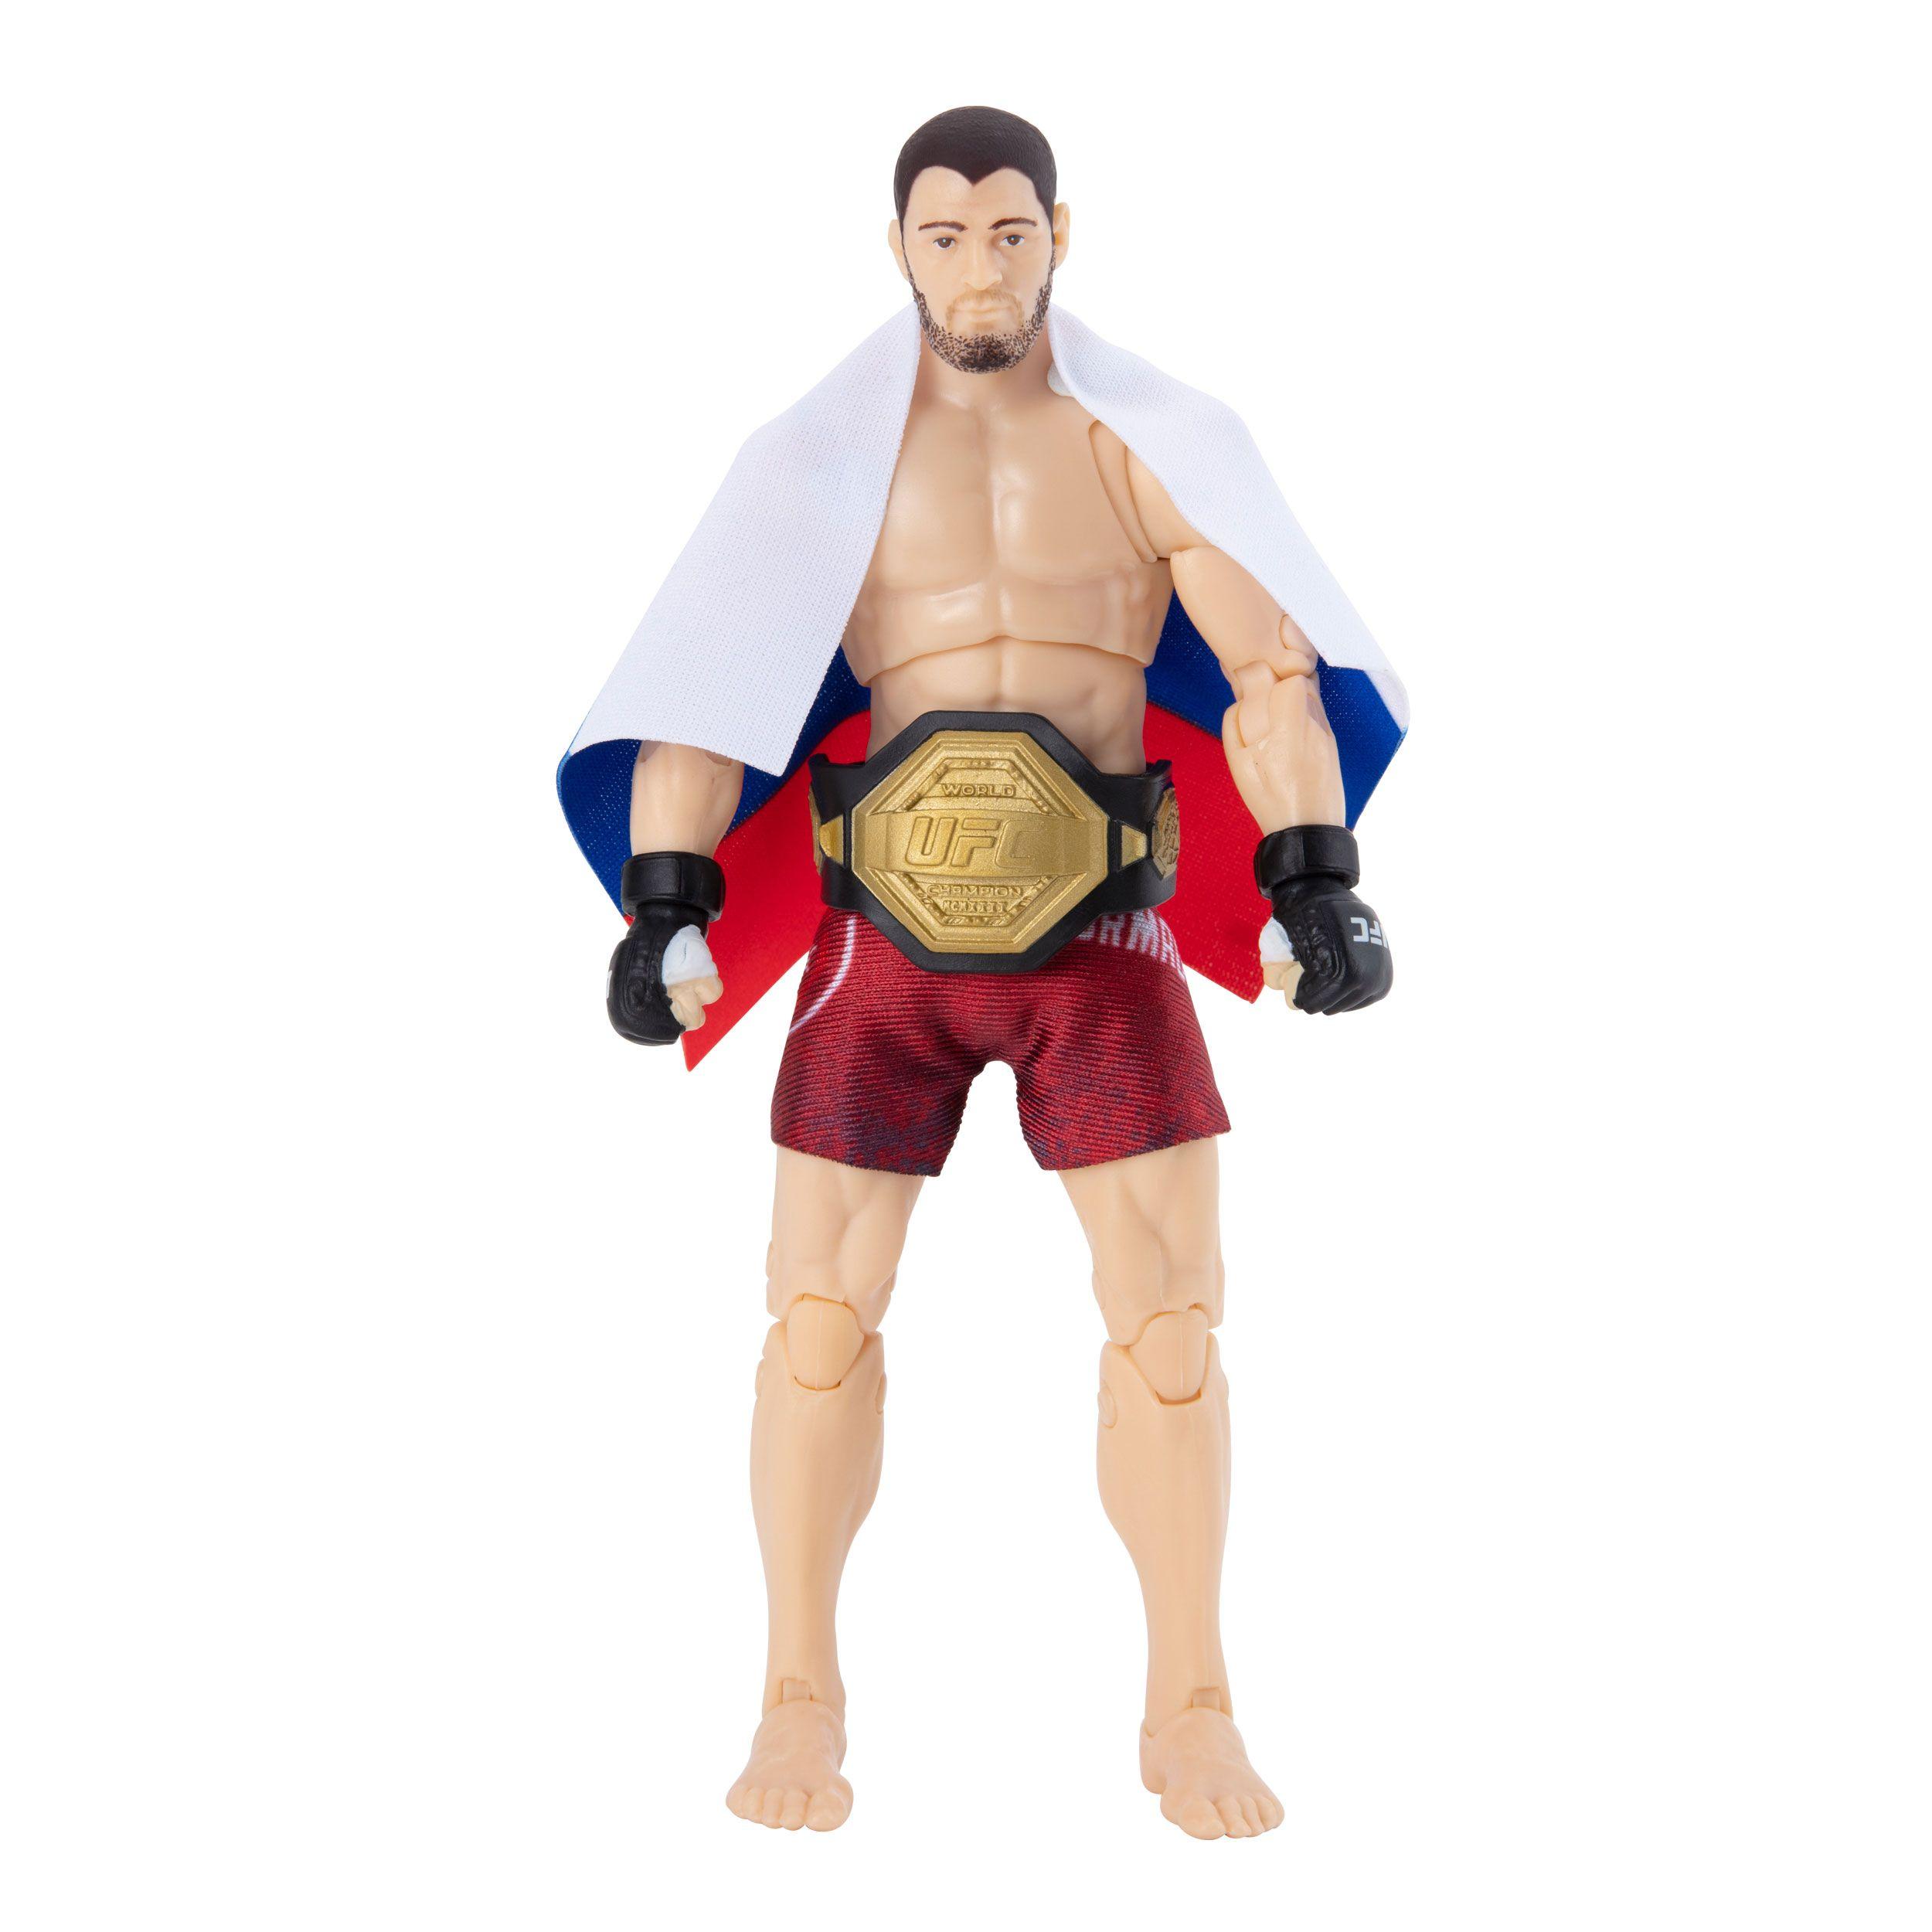 Figurka UFC - KHABIB NURMAGOMEDOV